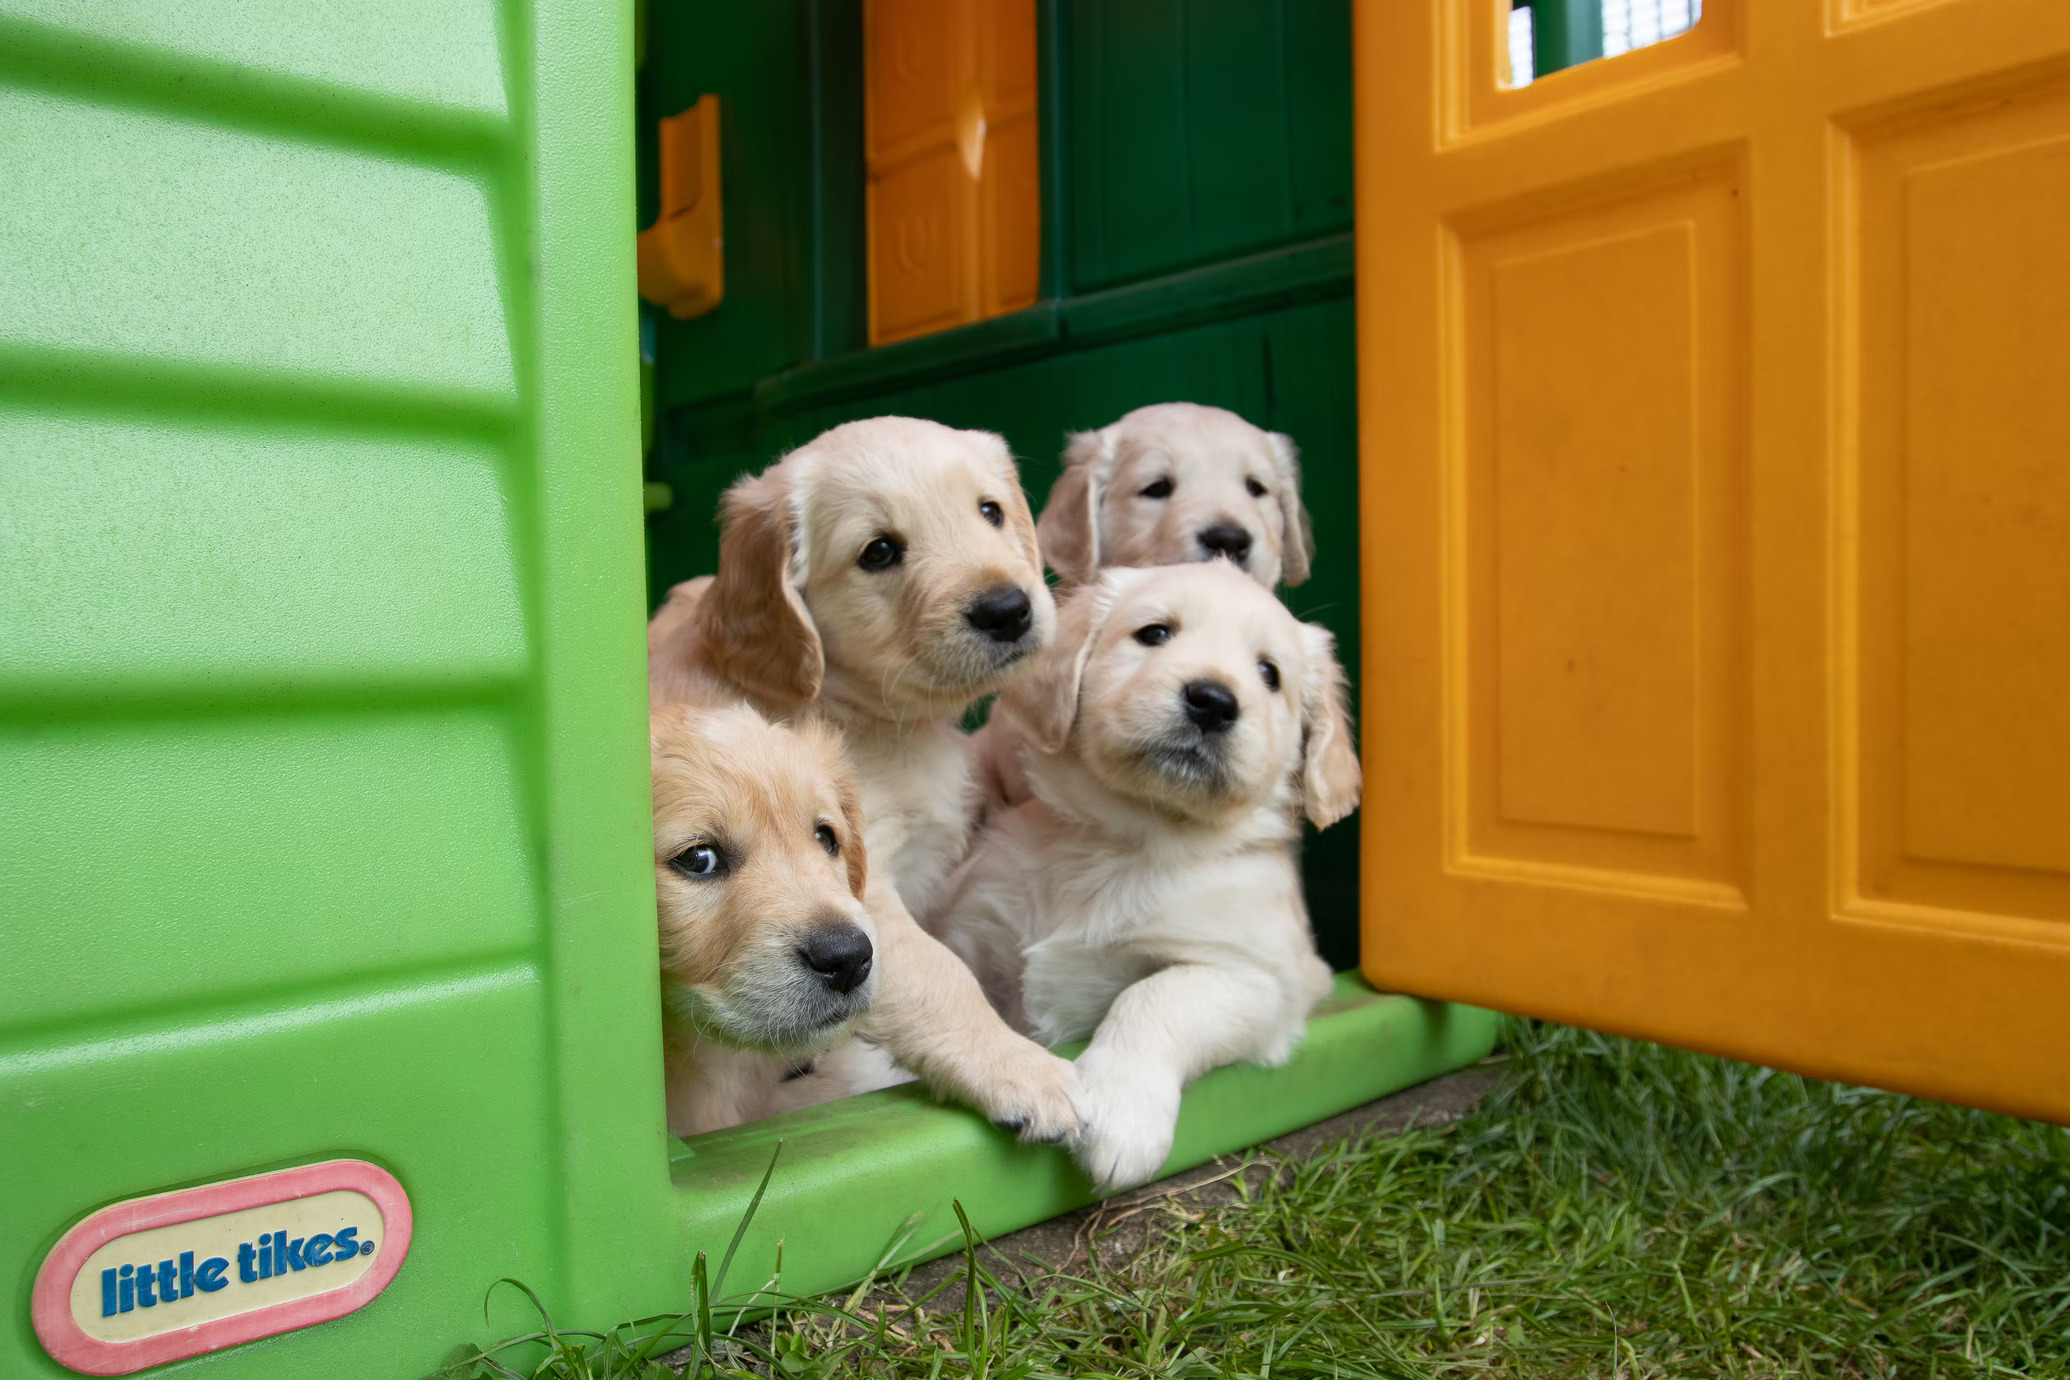 Four golden retriever puppies in a playhouse door.